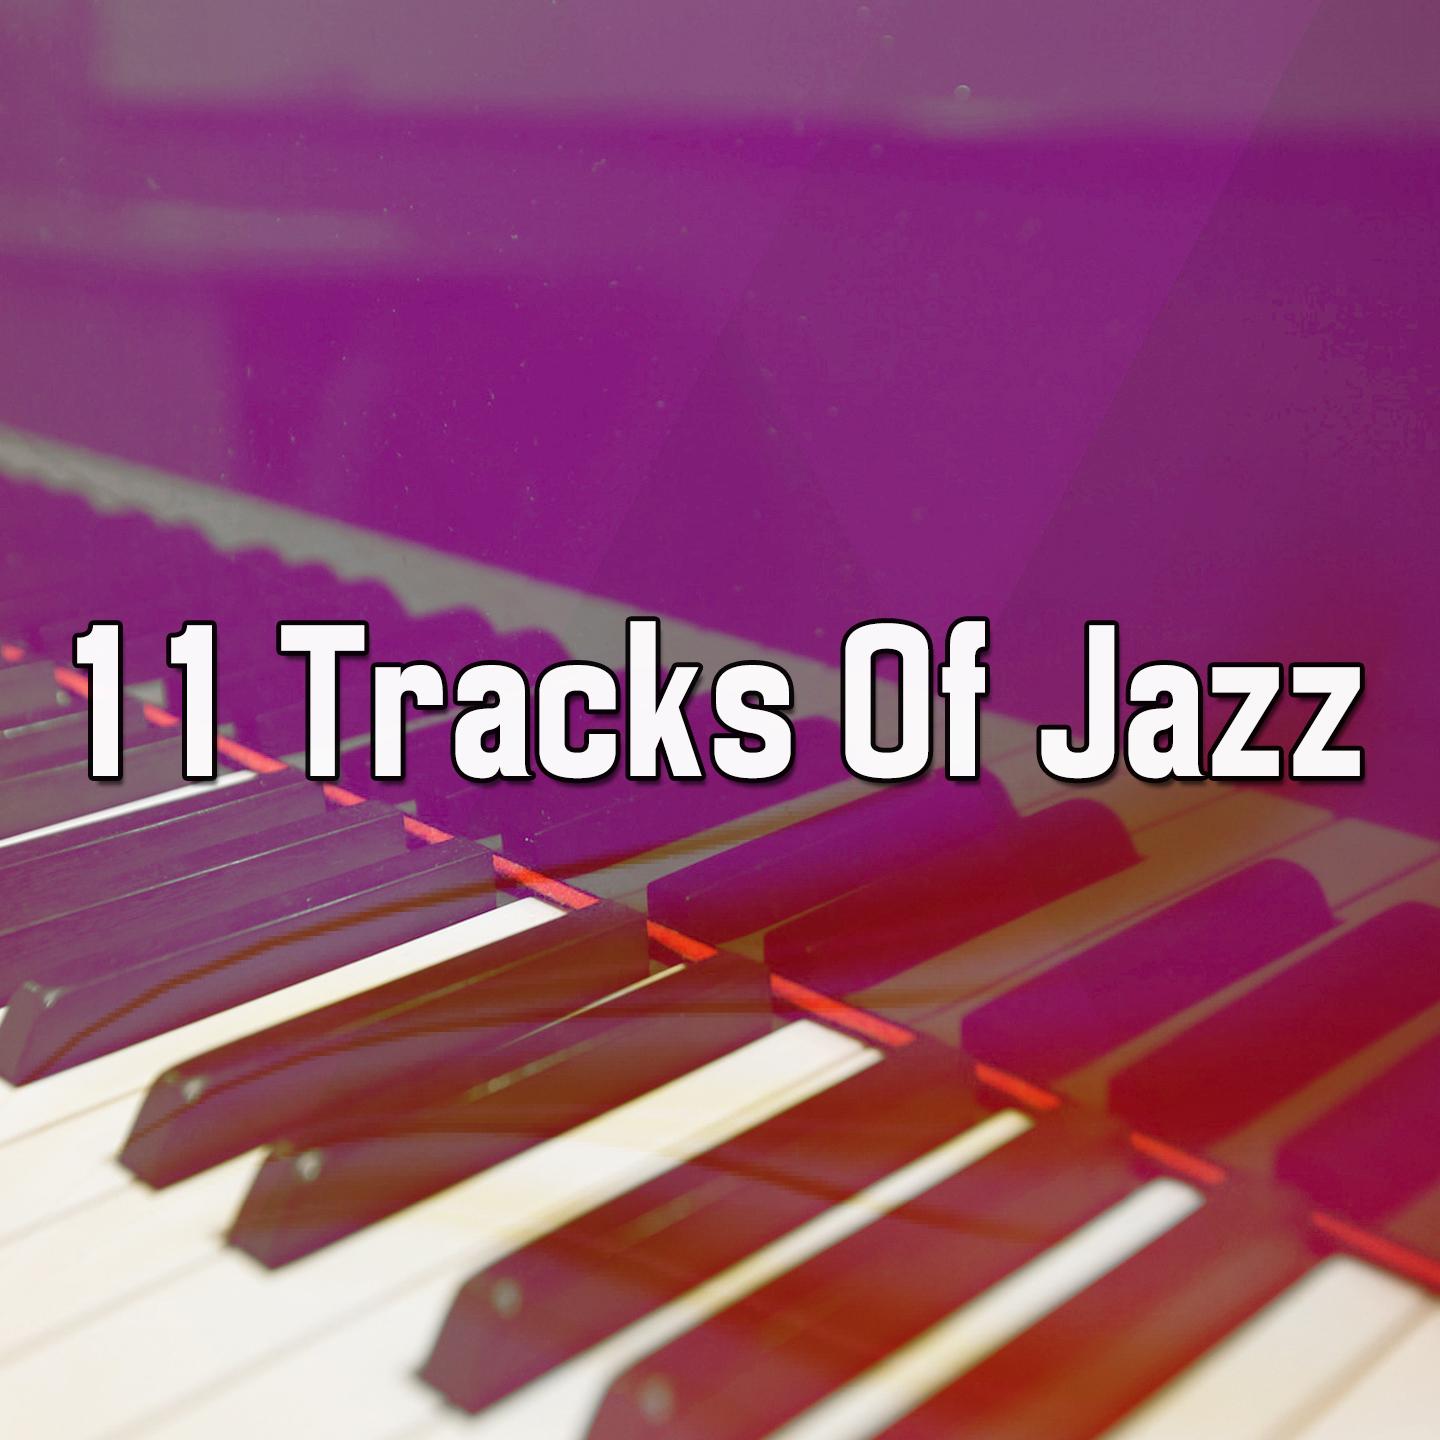 11 Tracks of Jazz